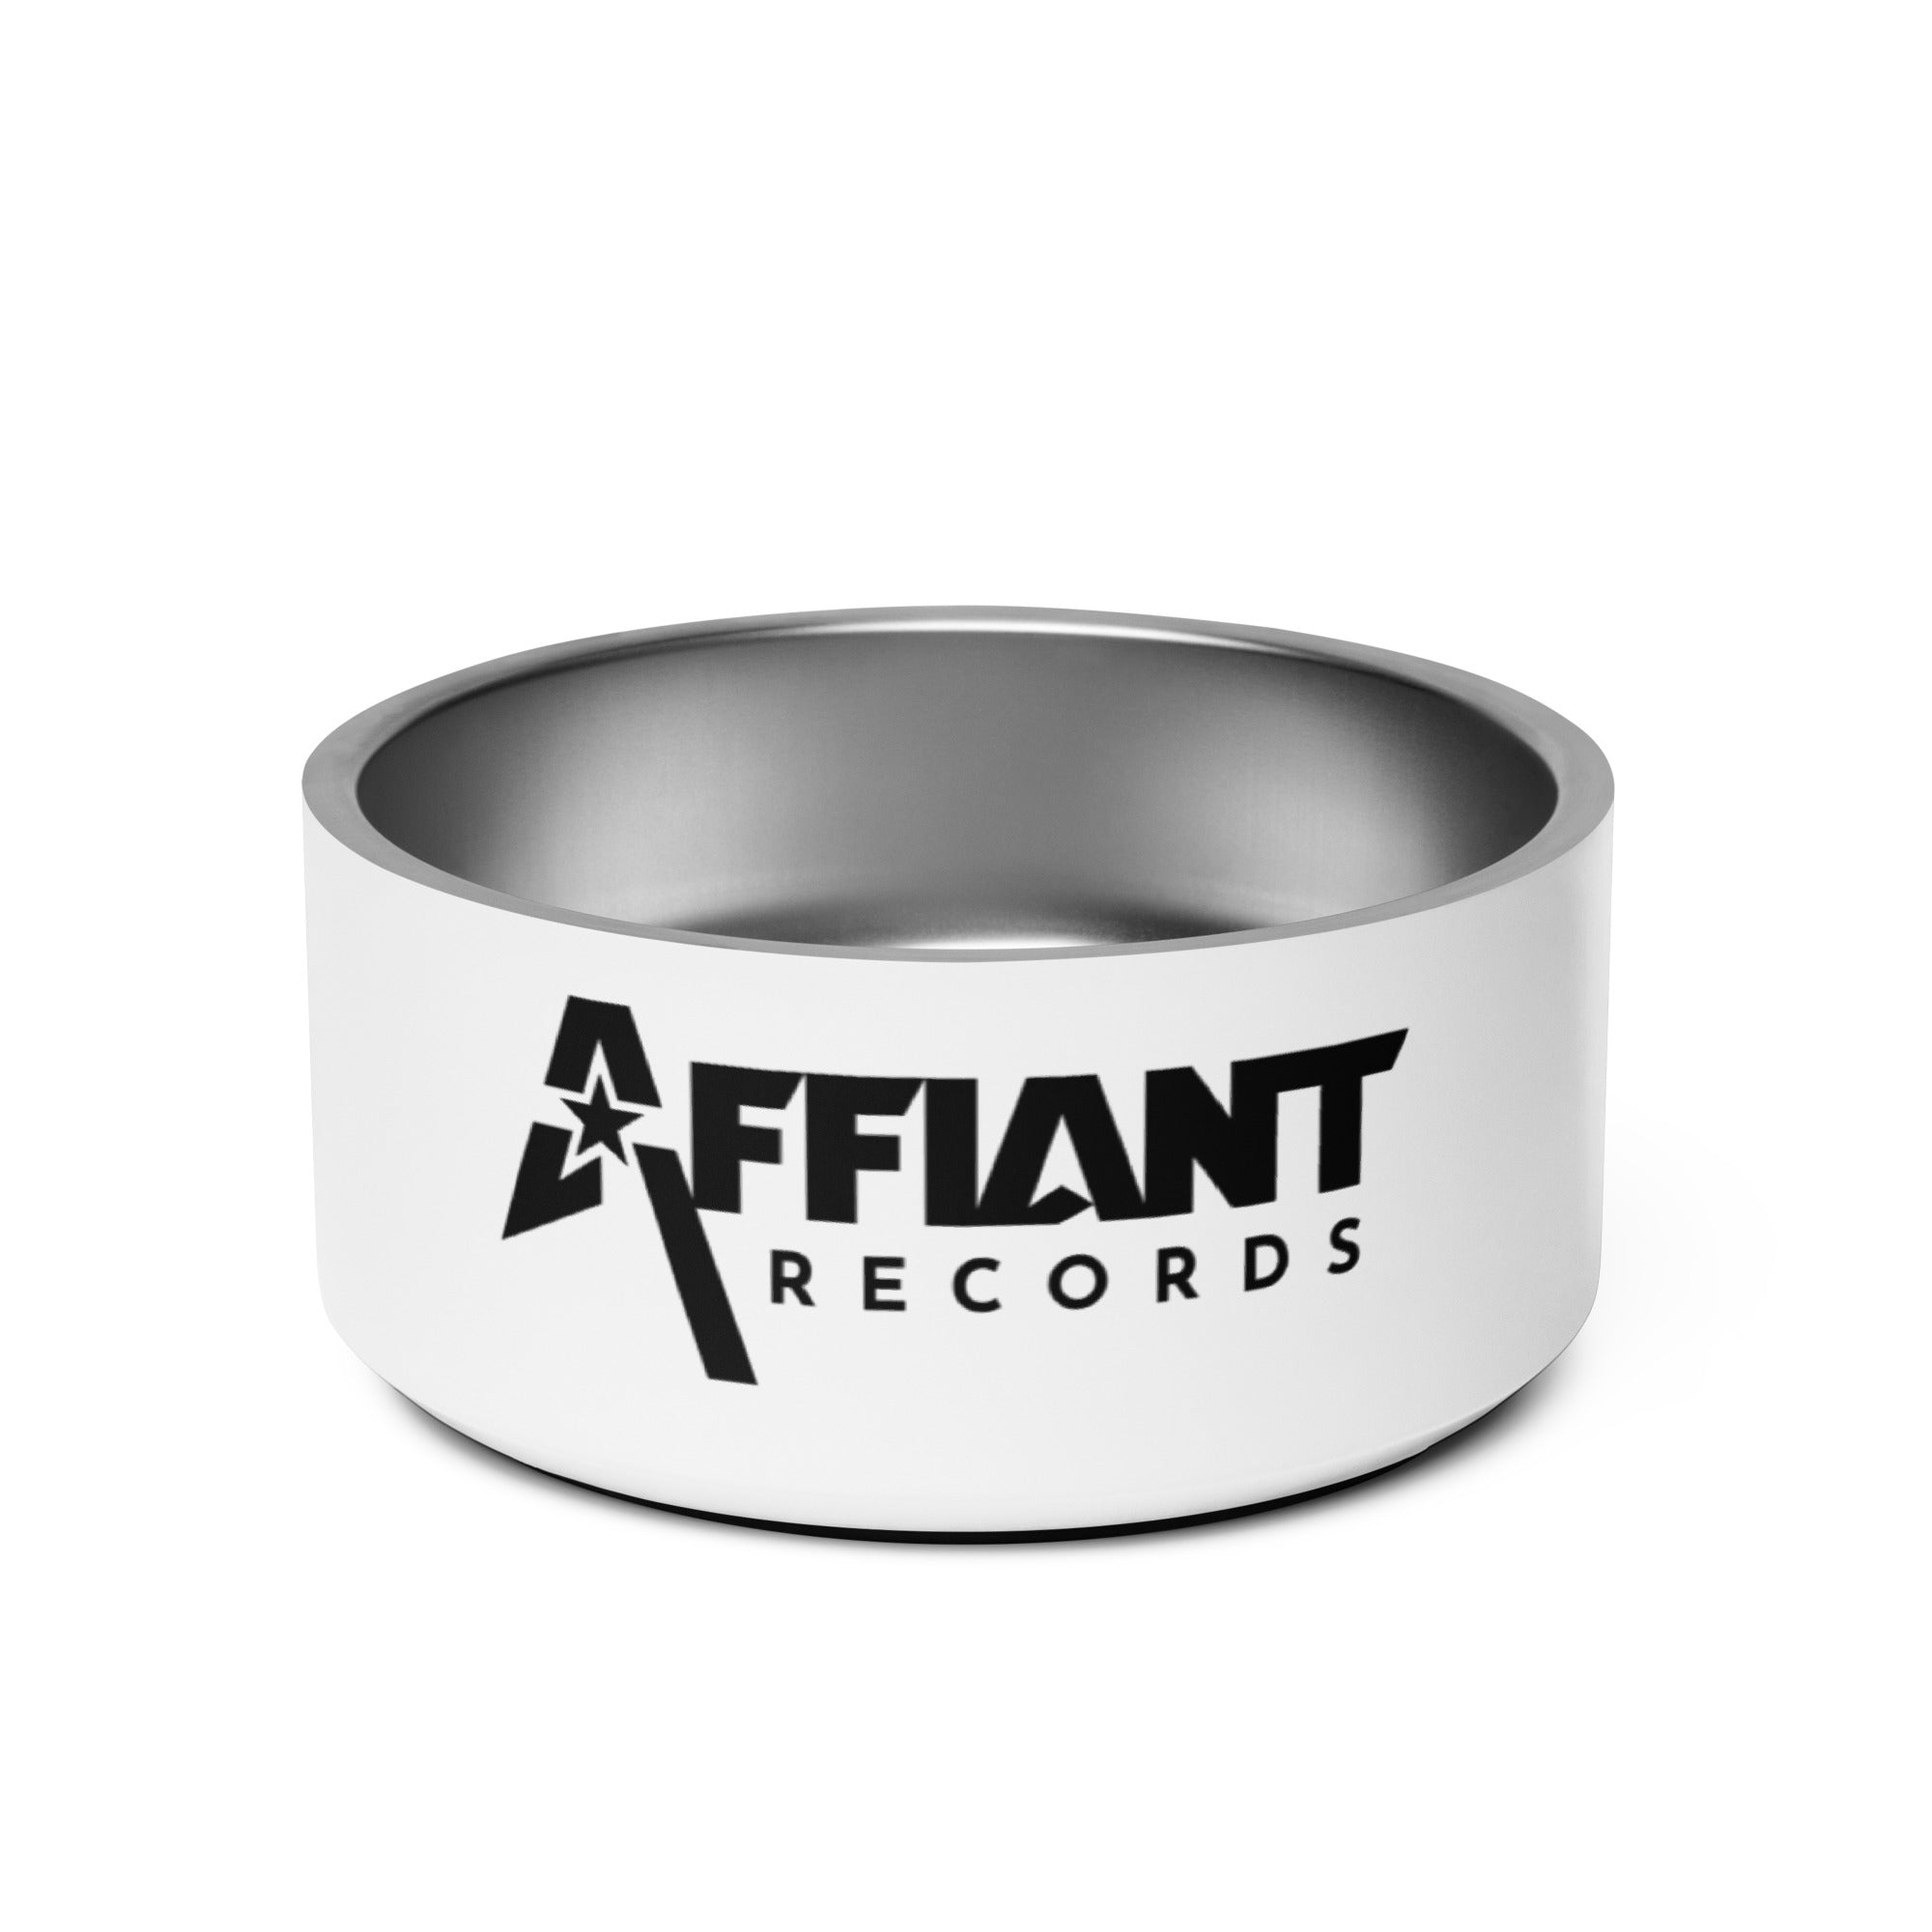 AFFIANT RECORDS - FULL LOGO PET BOWL